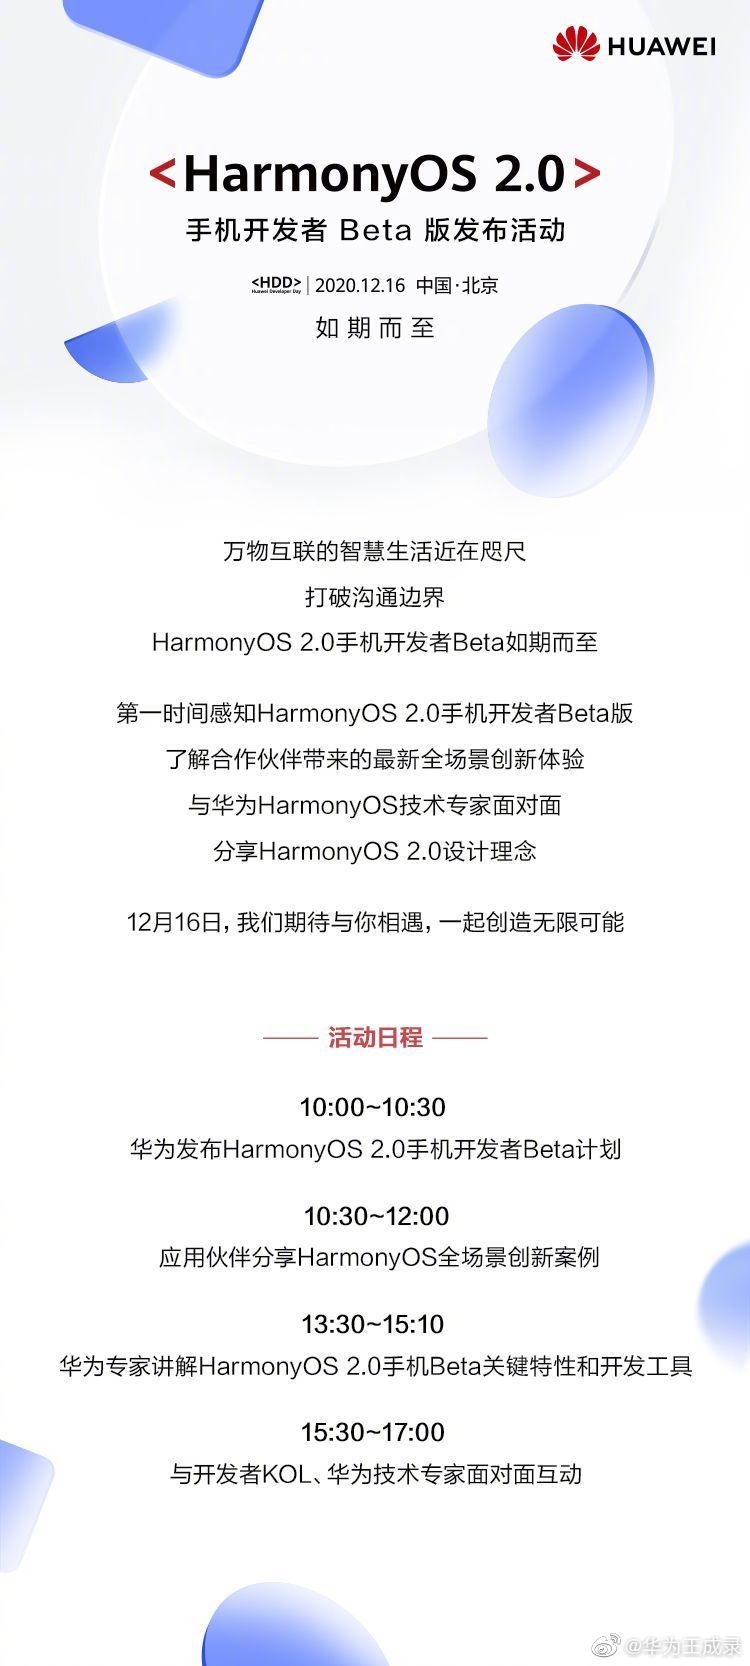 HarmonyOS 2.0 Mobile Phone Beta